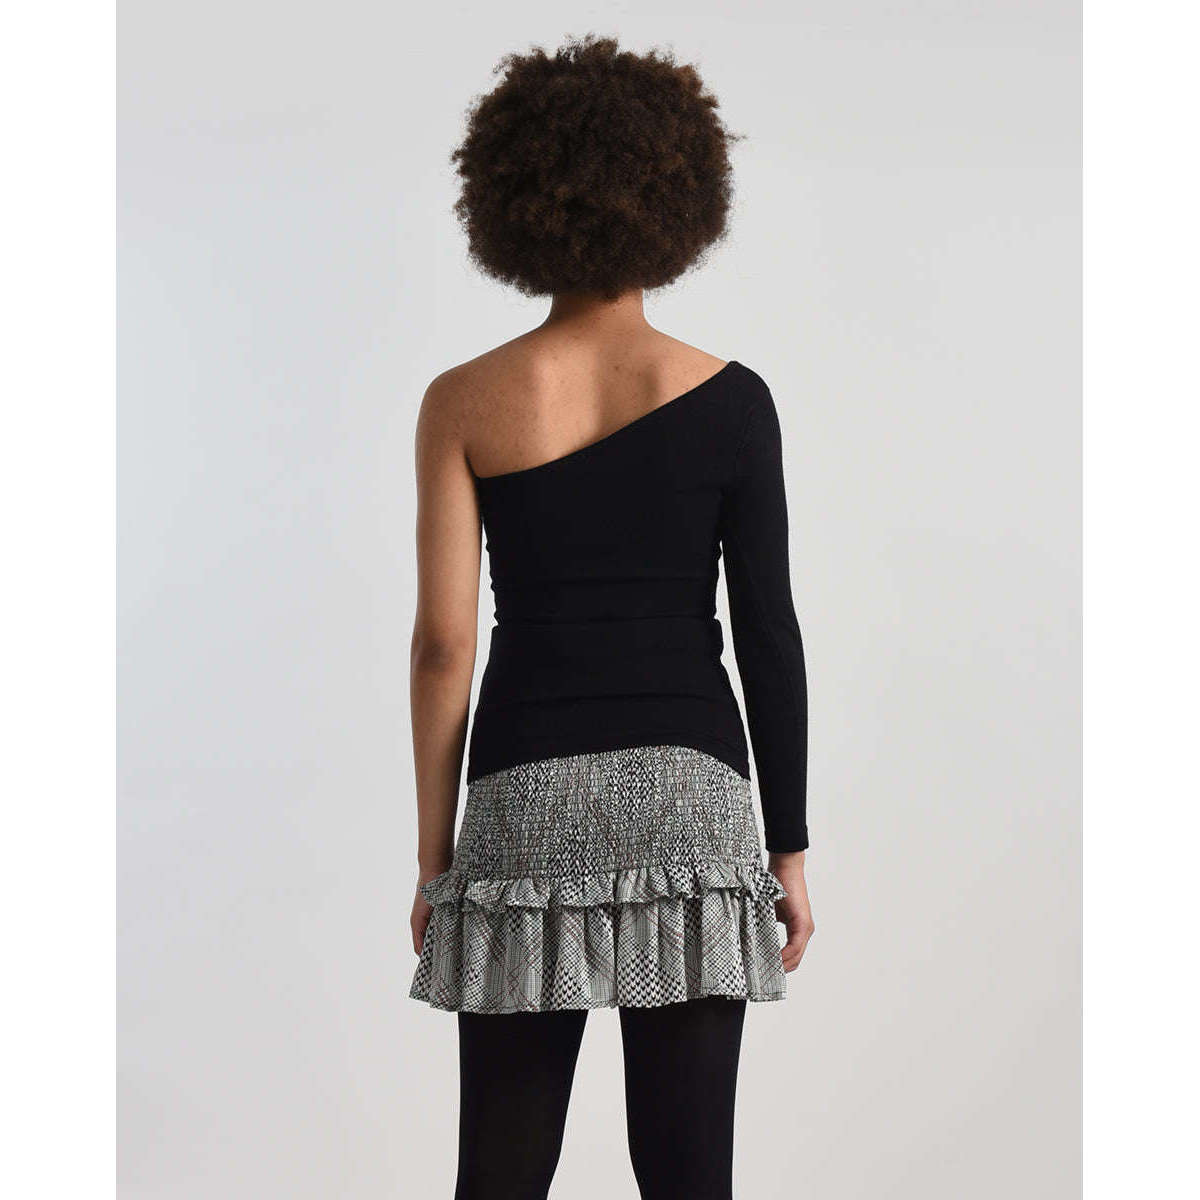 8.28 Boutique:Molly Bracken,Molly Bracken One Shoulder Knit Top,tops